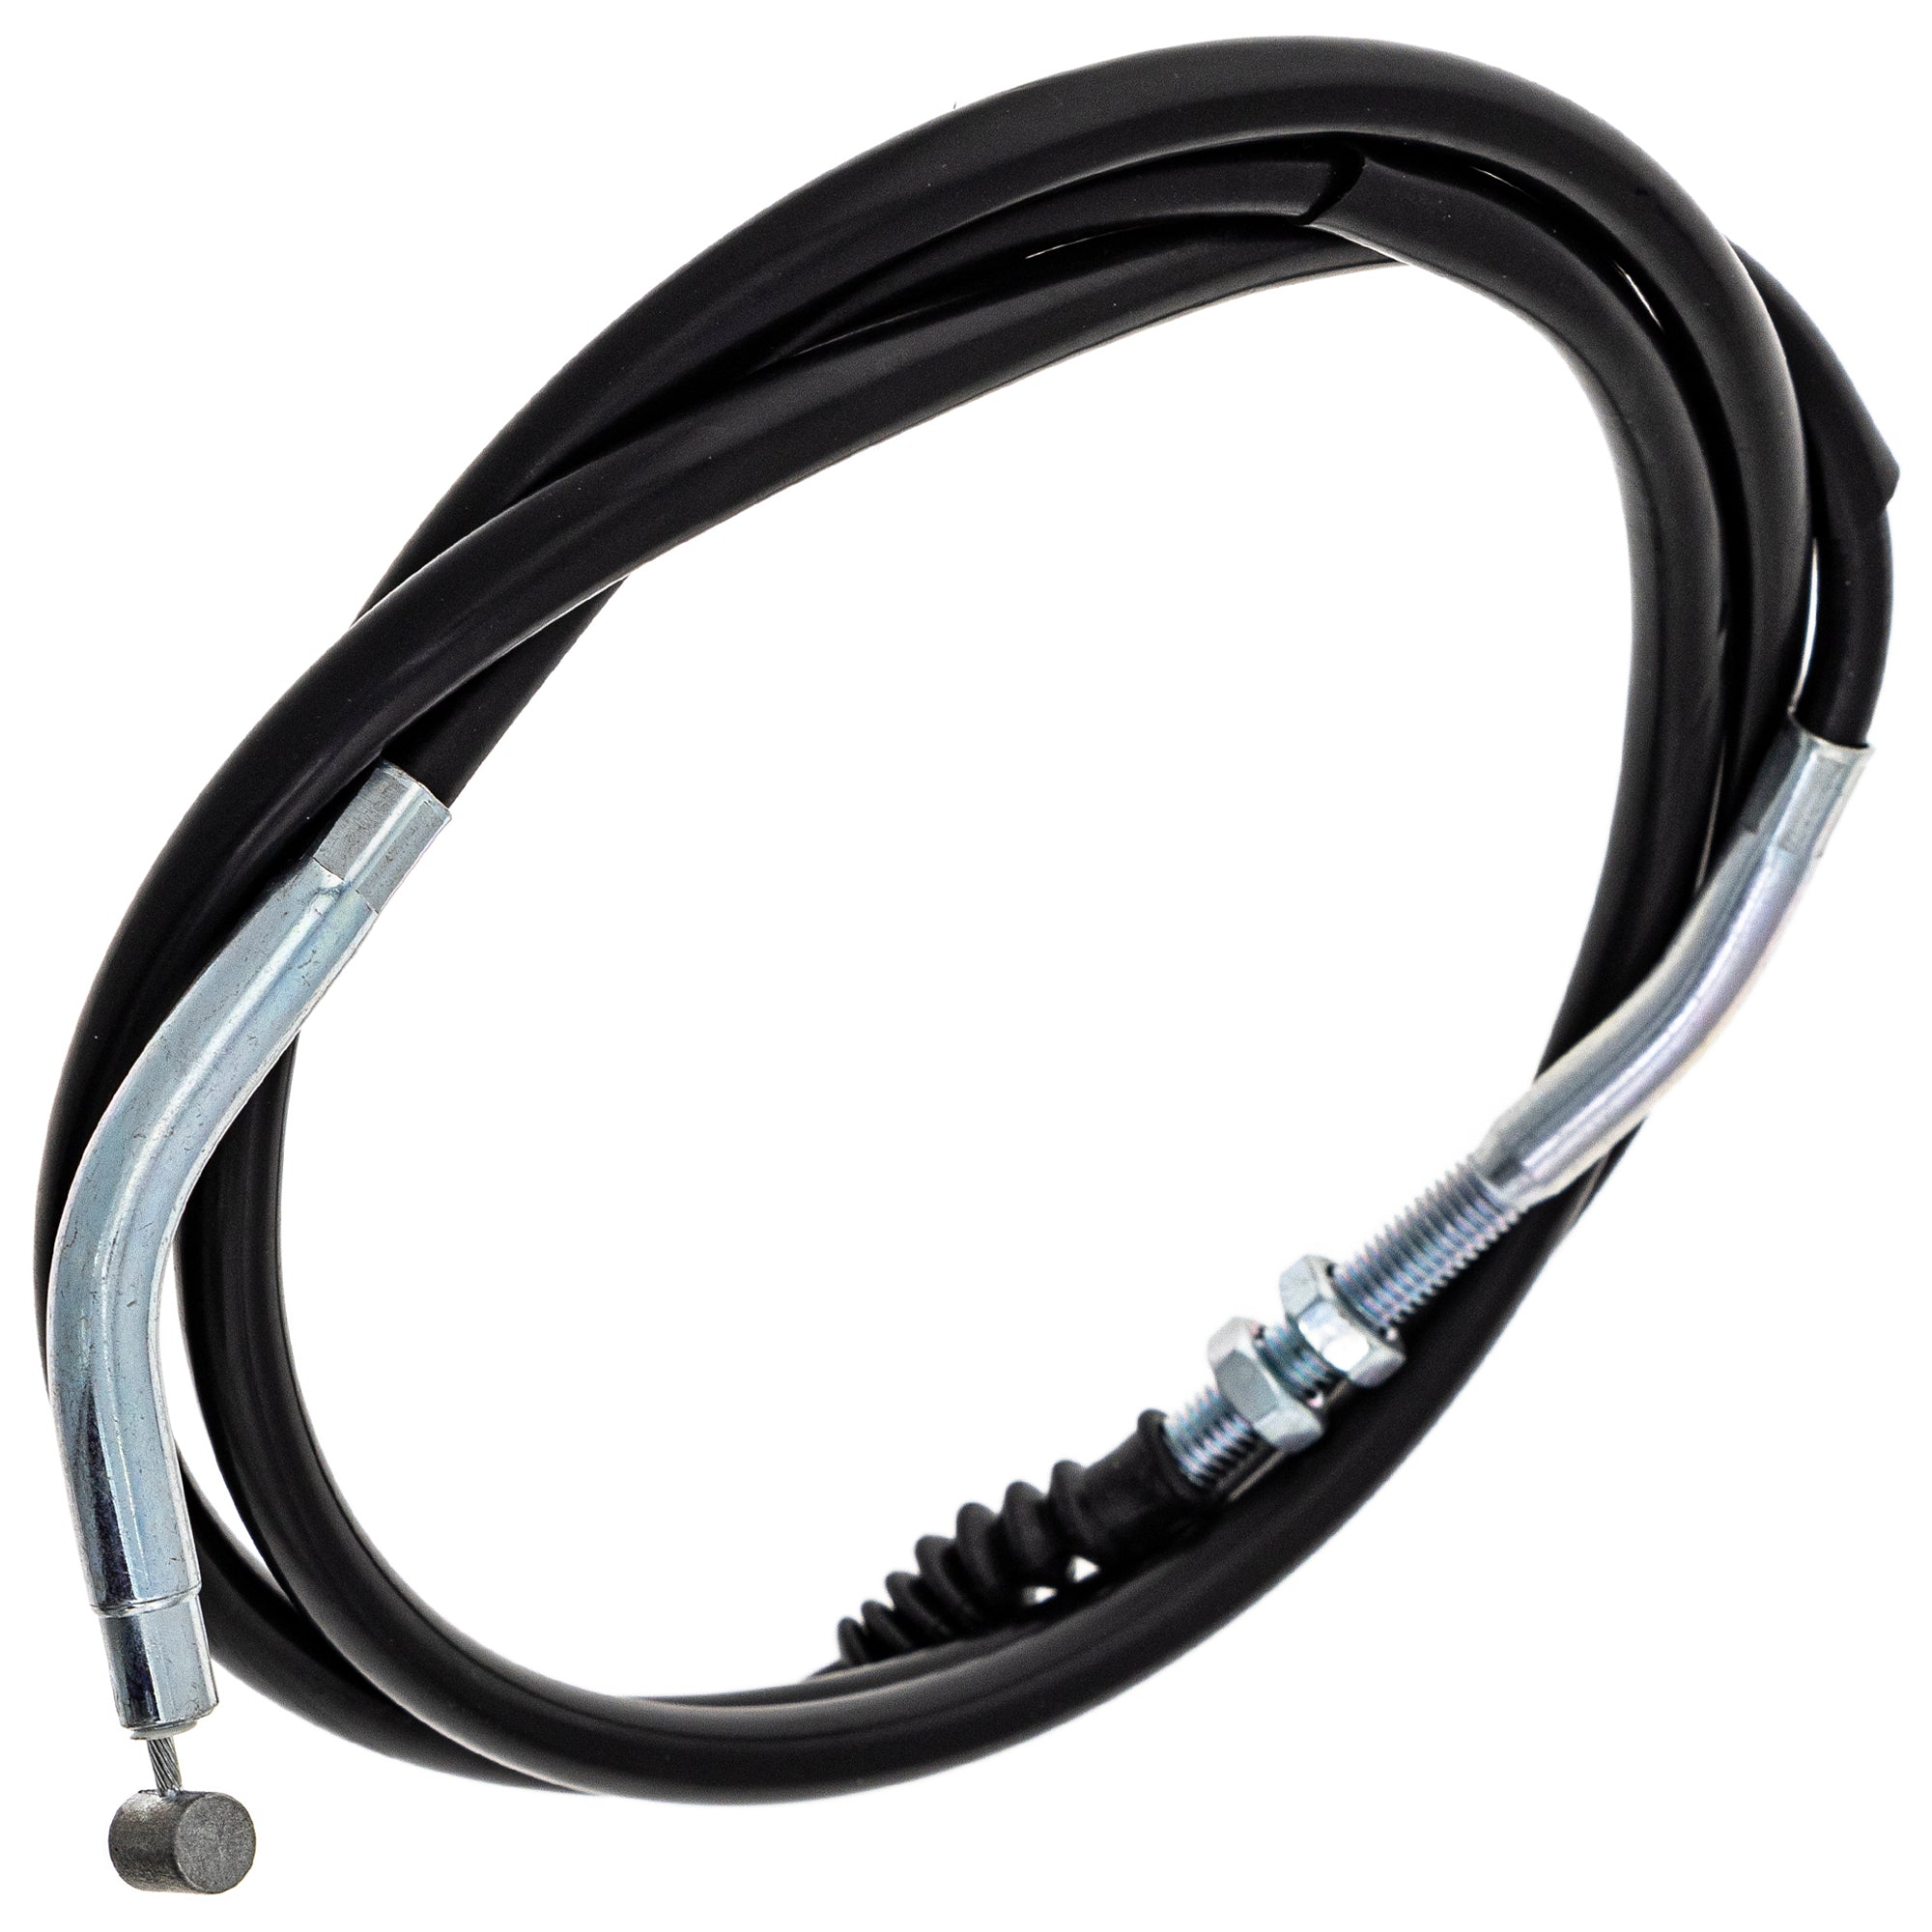 Clutch Cable for Kawasaki 454 LTD EN450A Vulcan 500 54011-1231